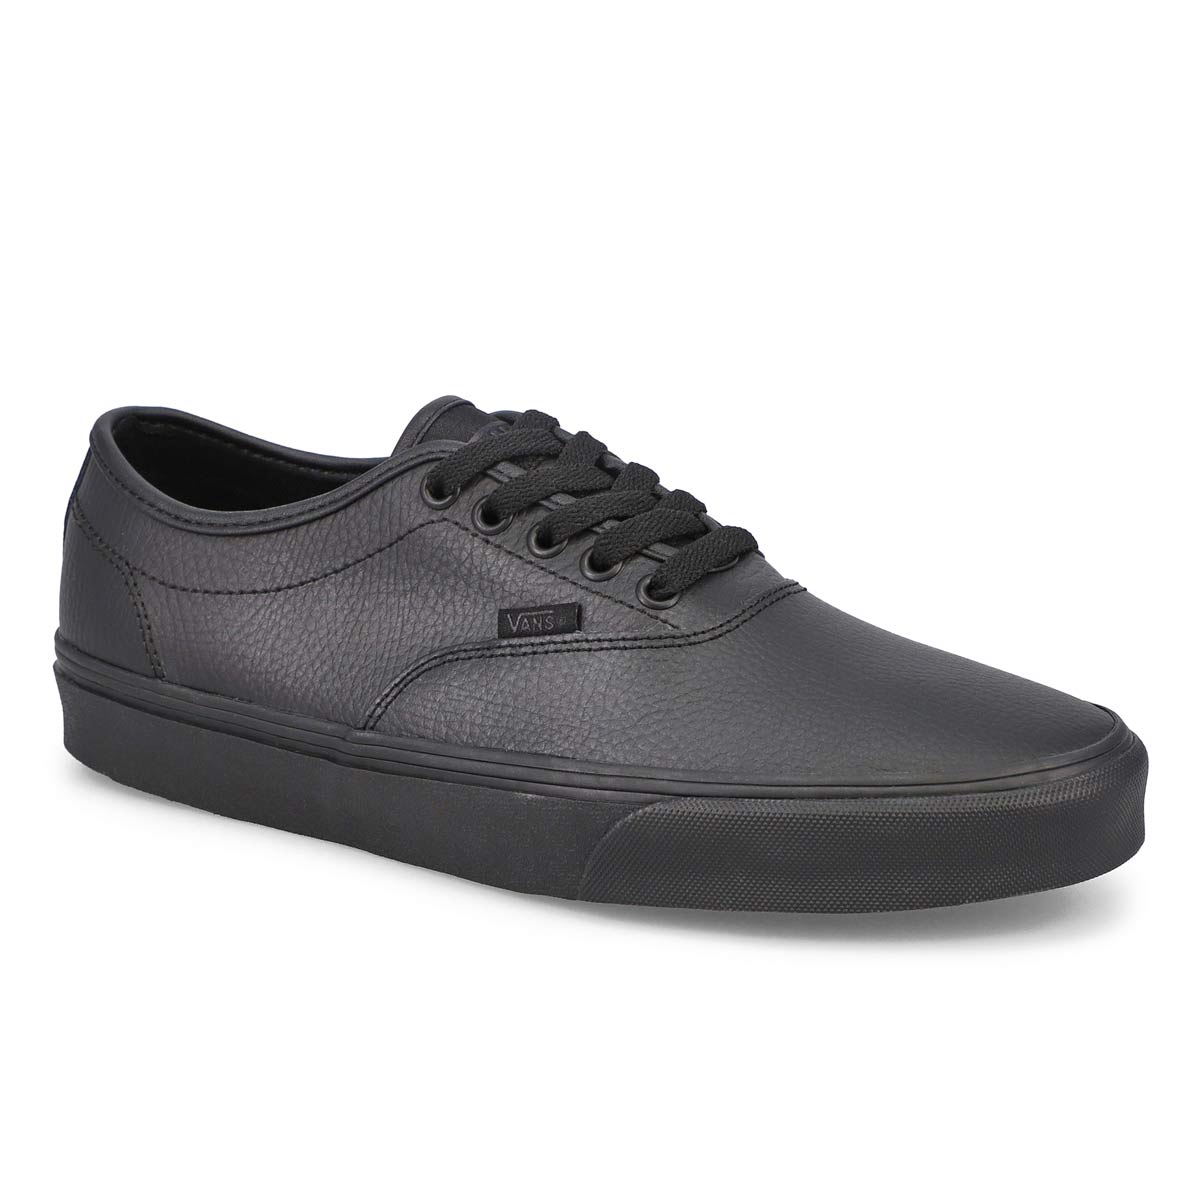 Men's DOHENY DECON black/black lace up sneakers